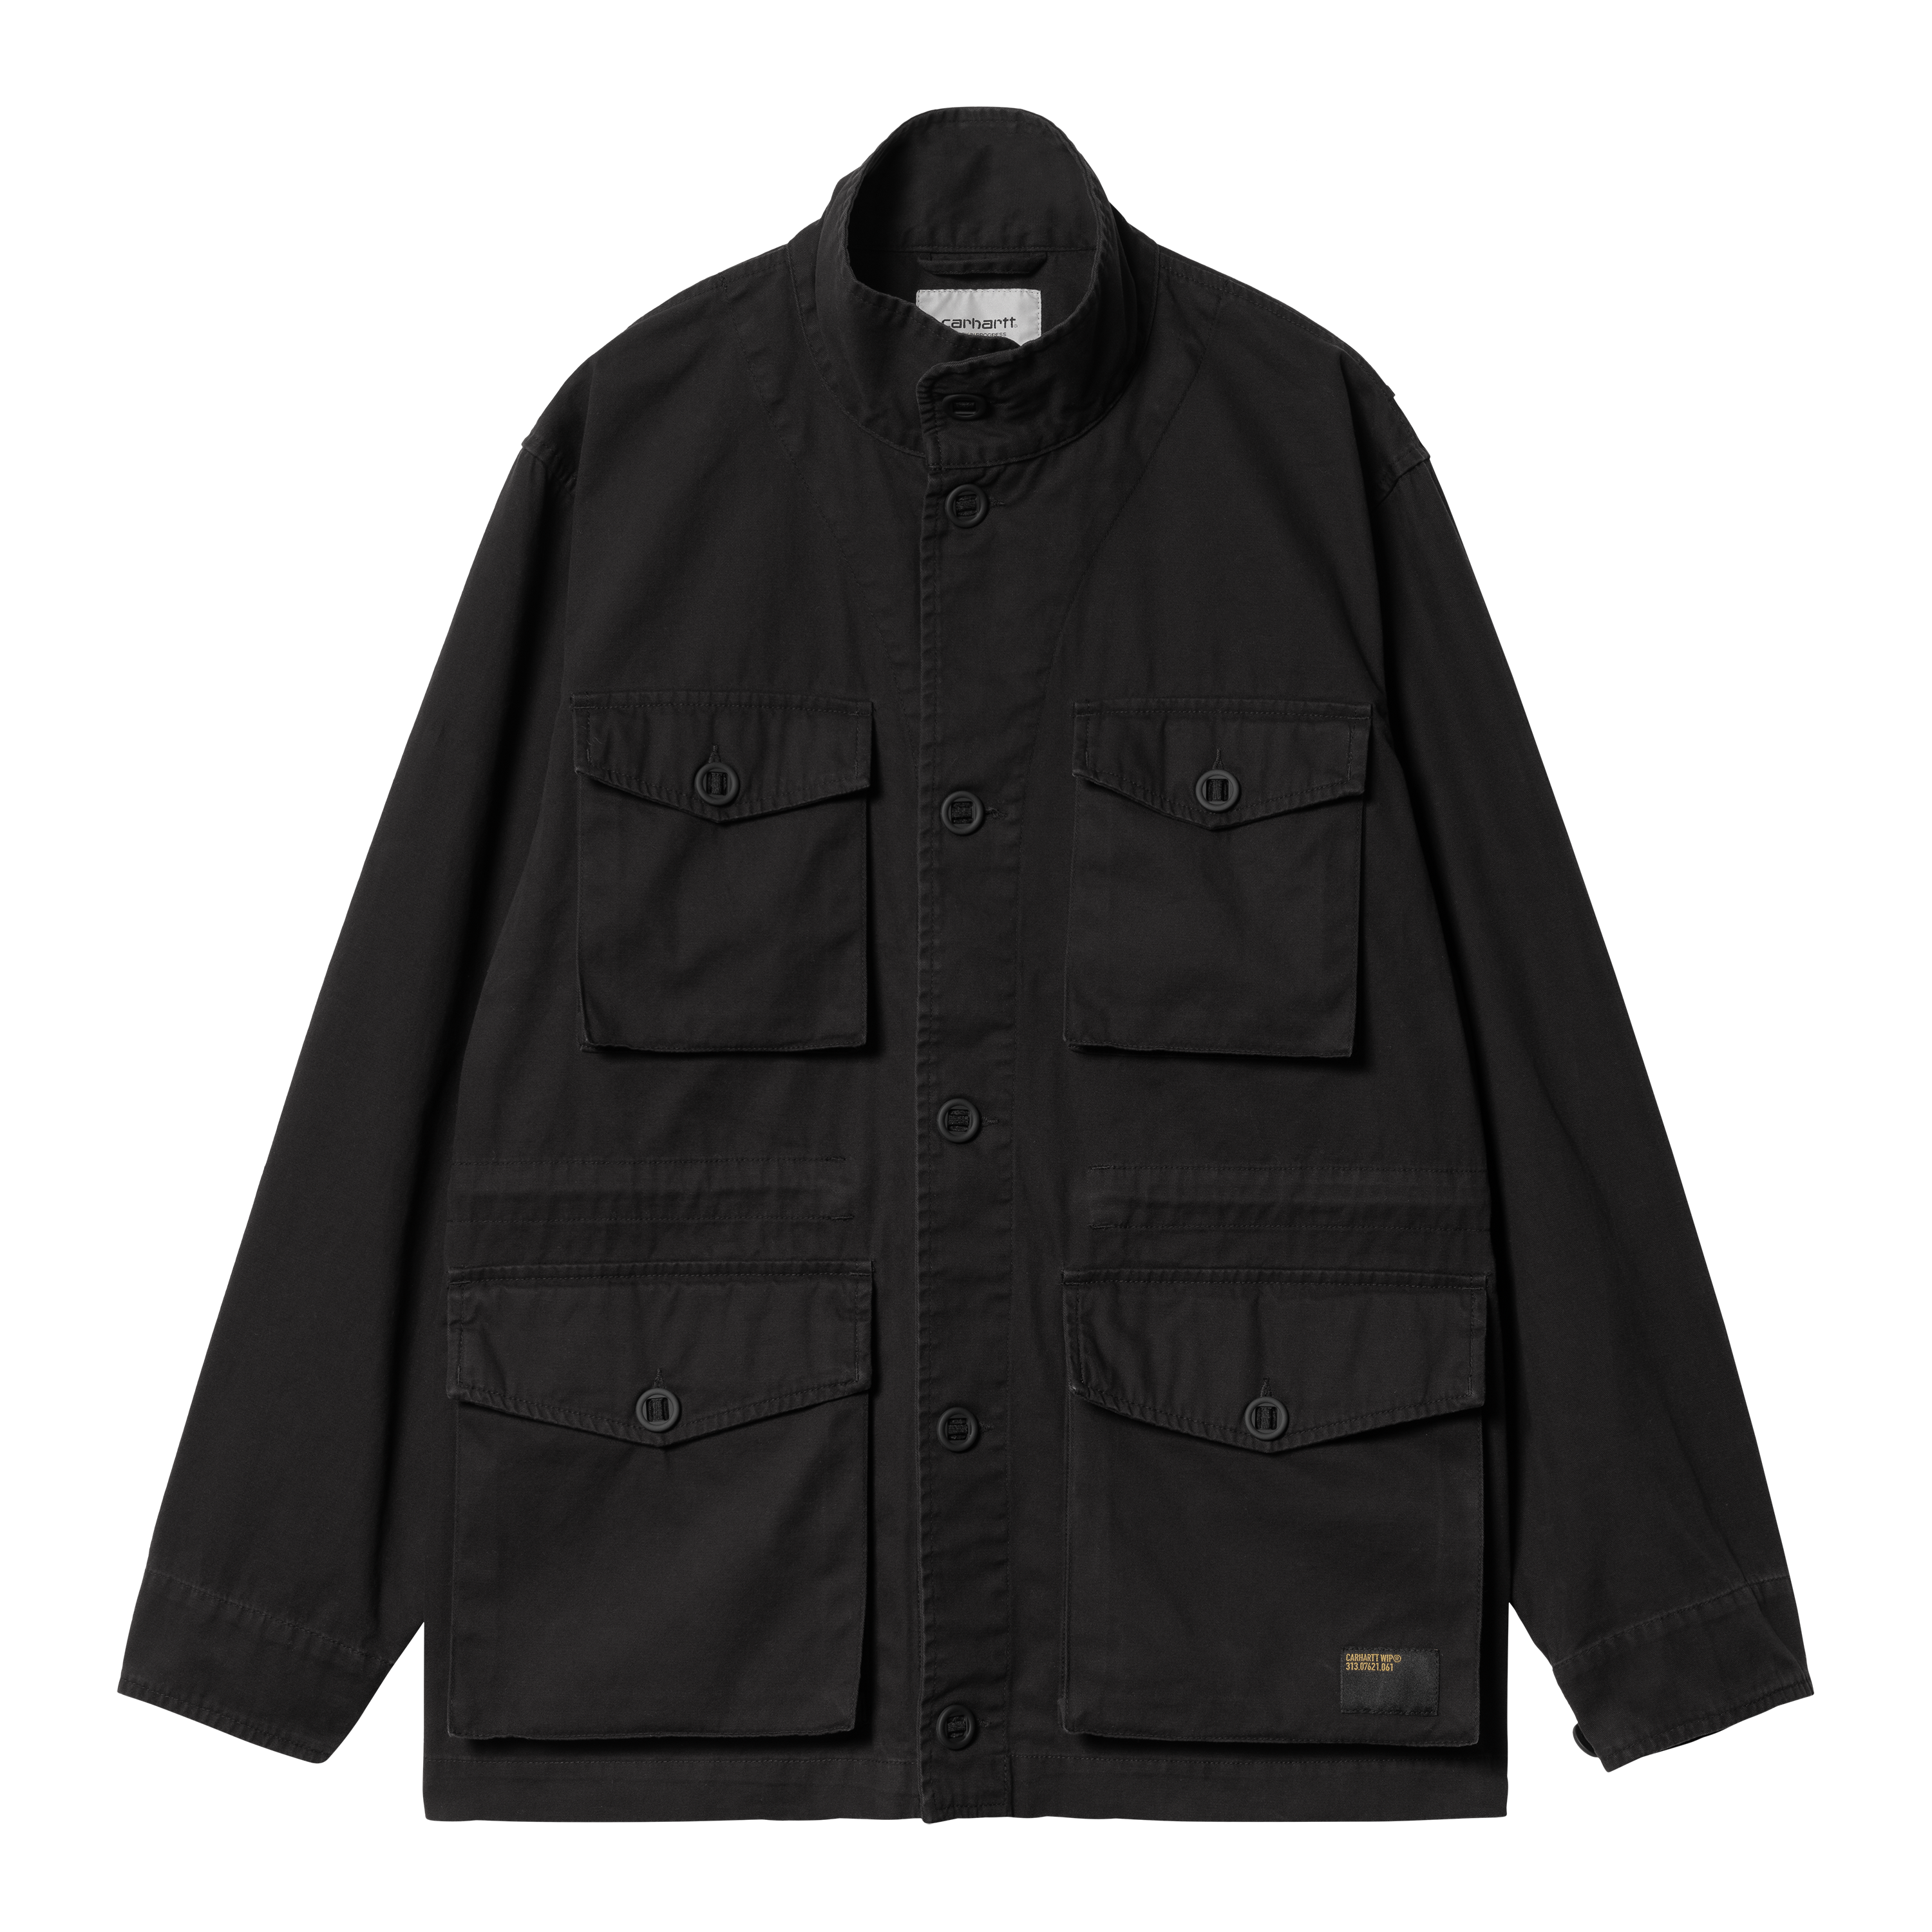 Carhartt WIP Unity Jacket in Black